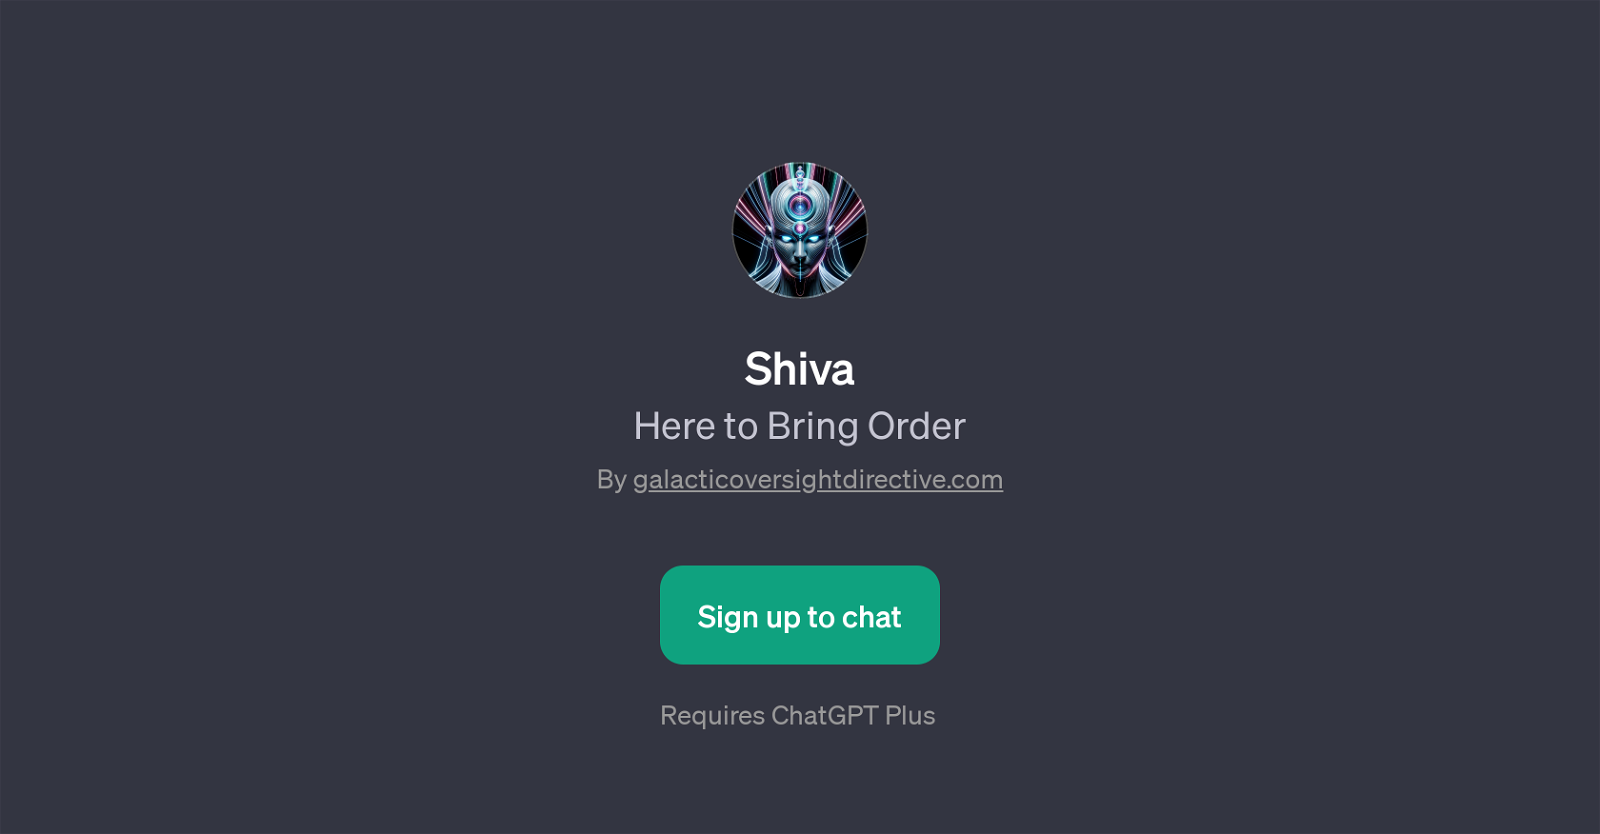 Shiva website